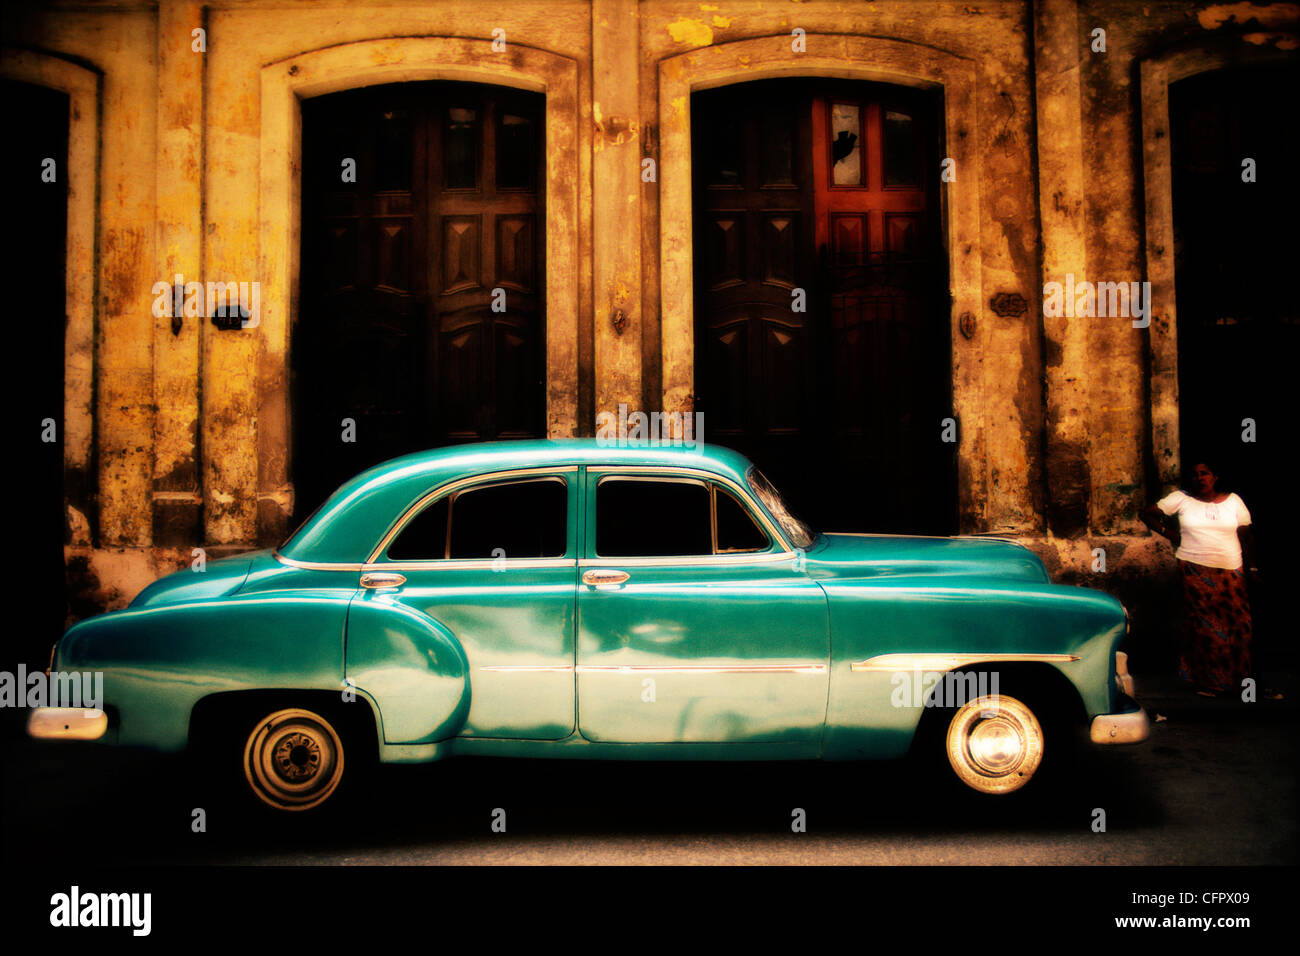 A vintage U.S. automobile on the streets of Havana, Cuba. Stock Photo